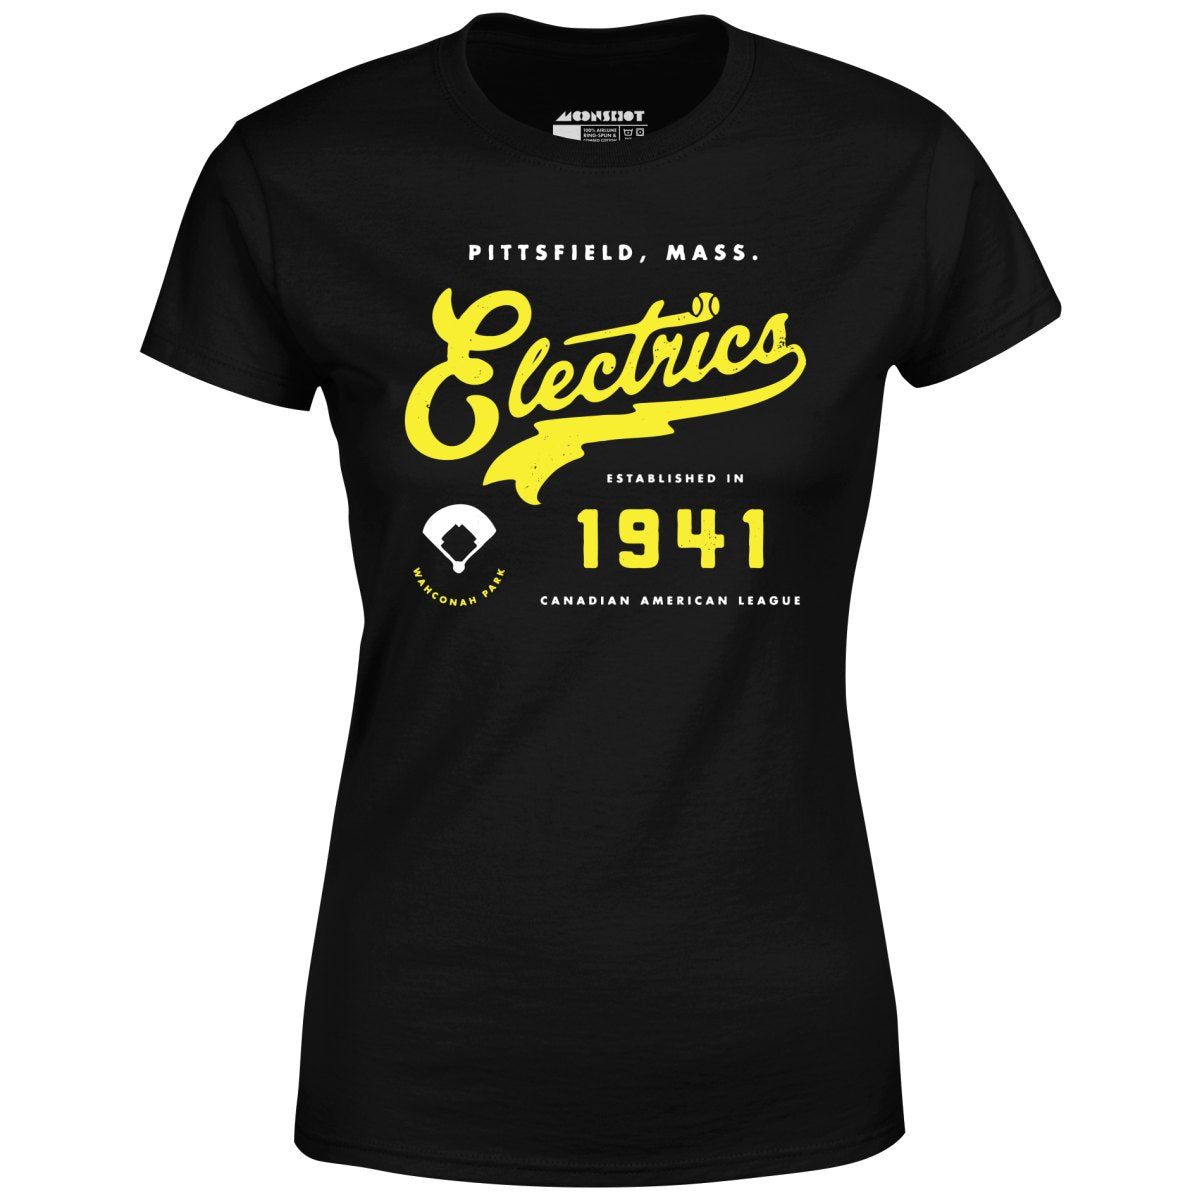 Pittsfield Electrics - Massachusetts - Vintage Defunct Baseball Teams - Women's T-Shirt